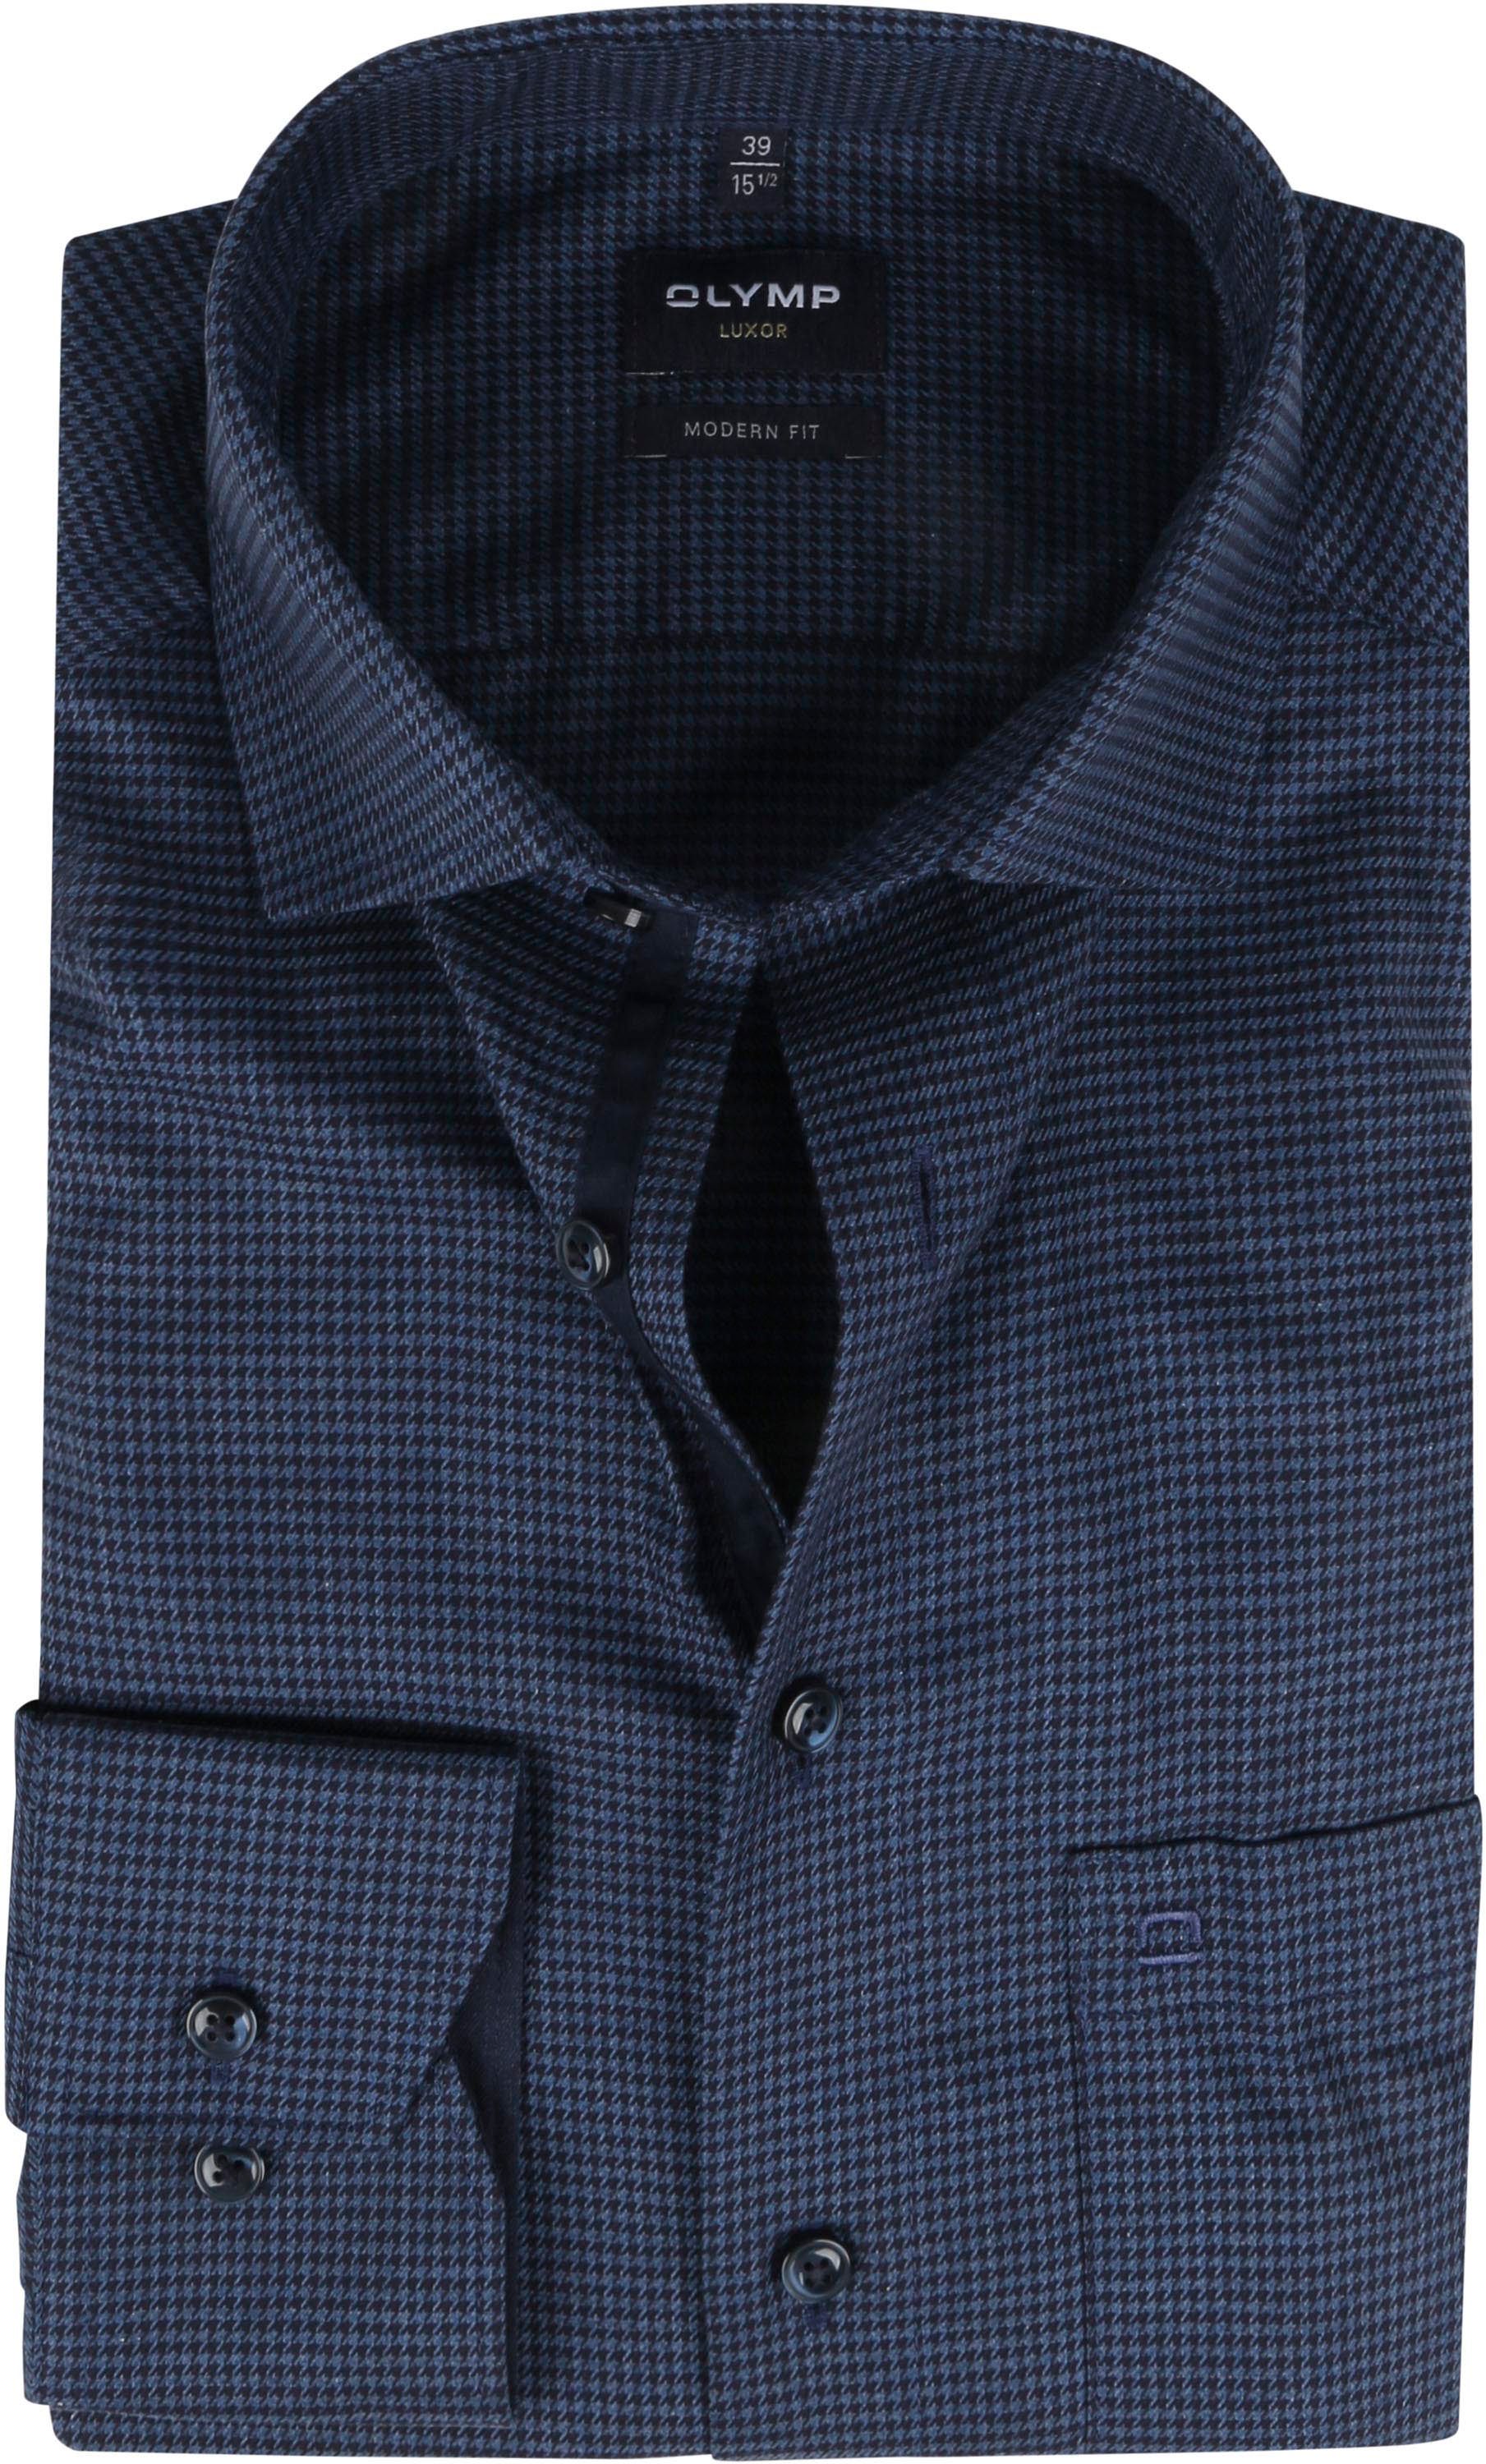 Olymp Luxor Modern Fit Shirt Pied De Poule Dark Blue Dark Blue size 15